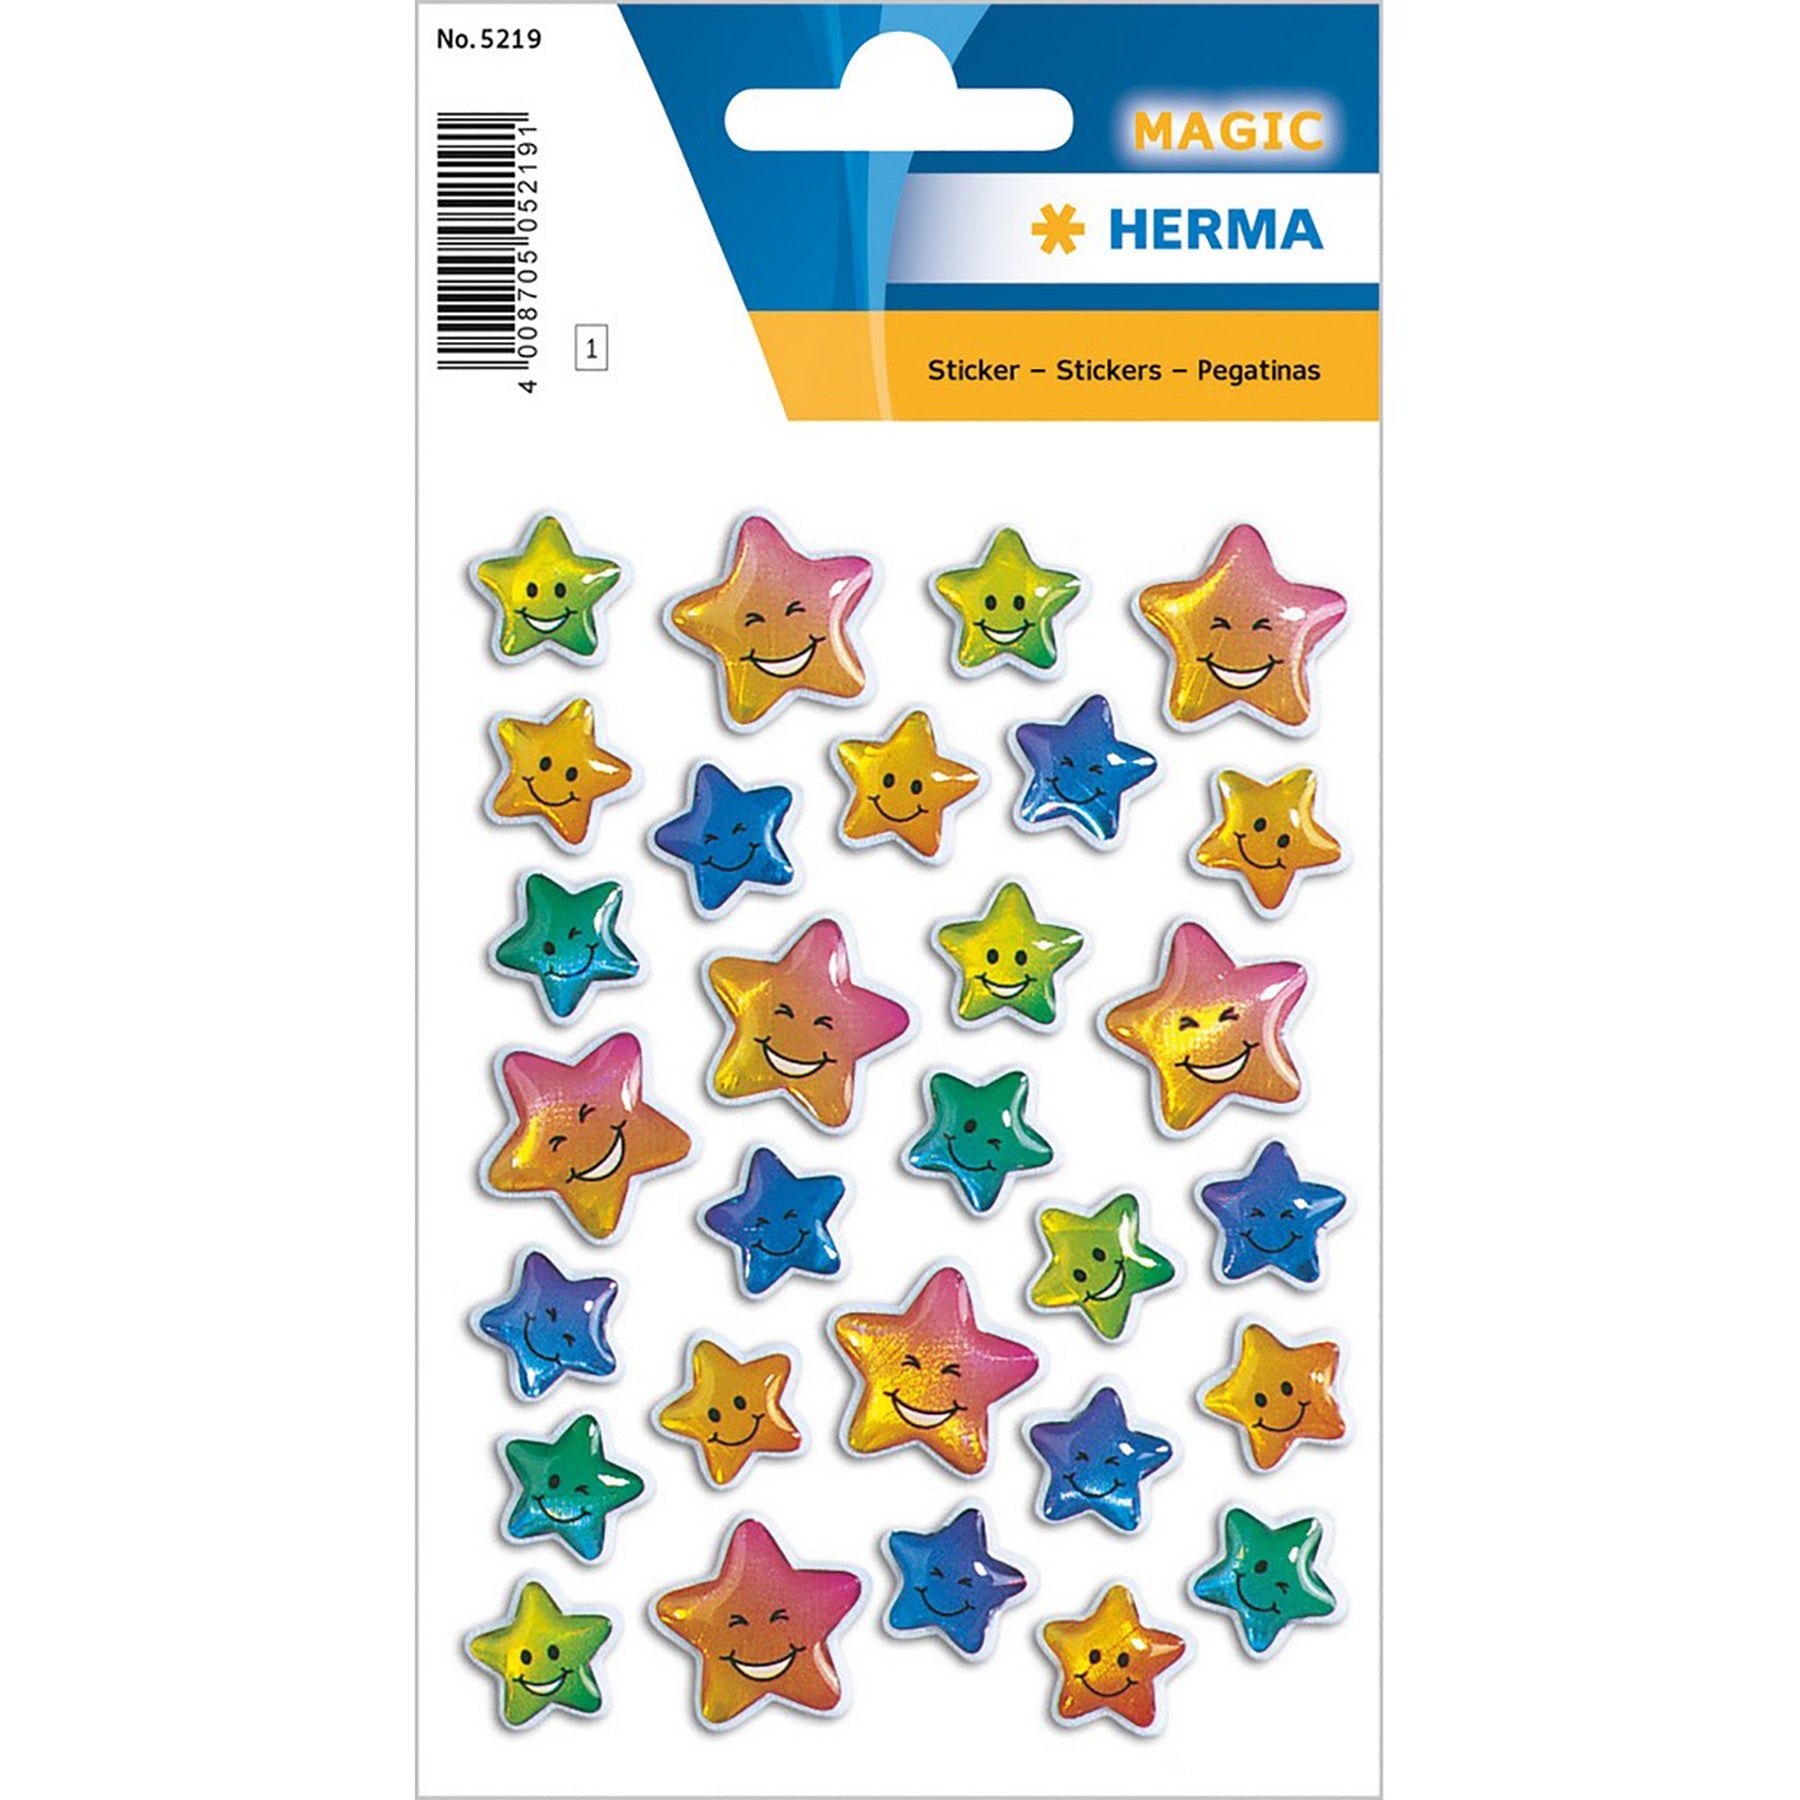 Herma Magic Stickers Stars 3D Crystal 4.75x3.1in Sheet 